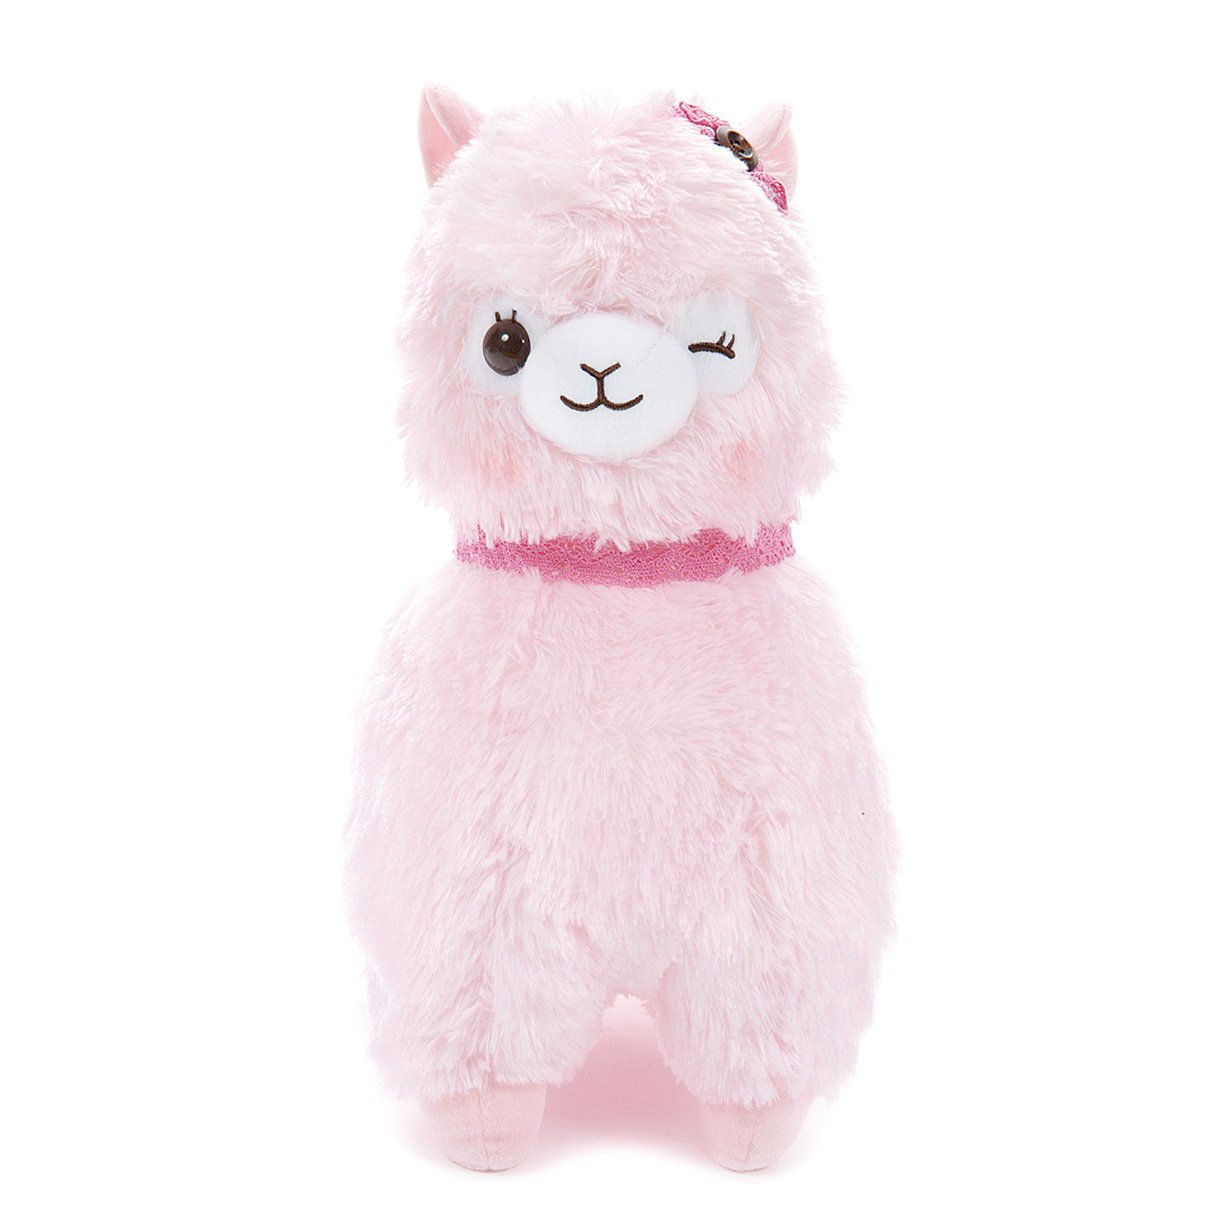 Plush Alpaca, Amuse, Alpacasso, Momo-chan, Pink, 15 Inches BIG Size